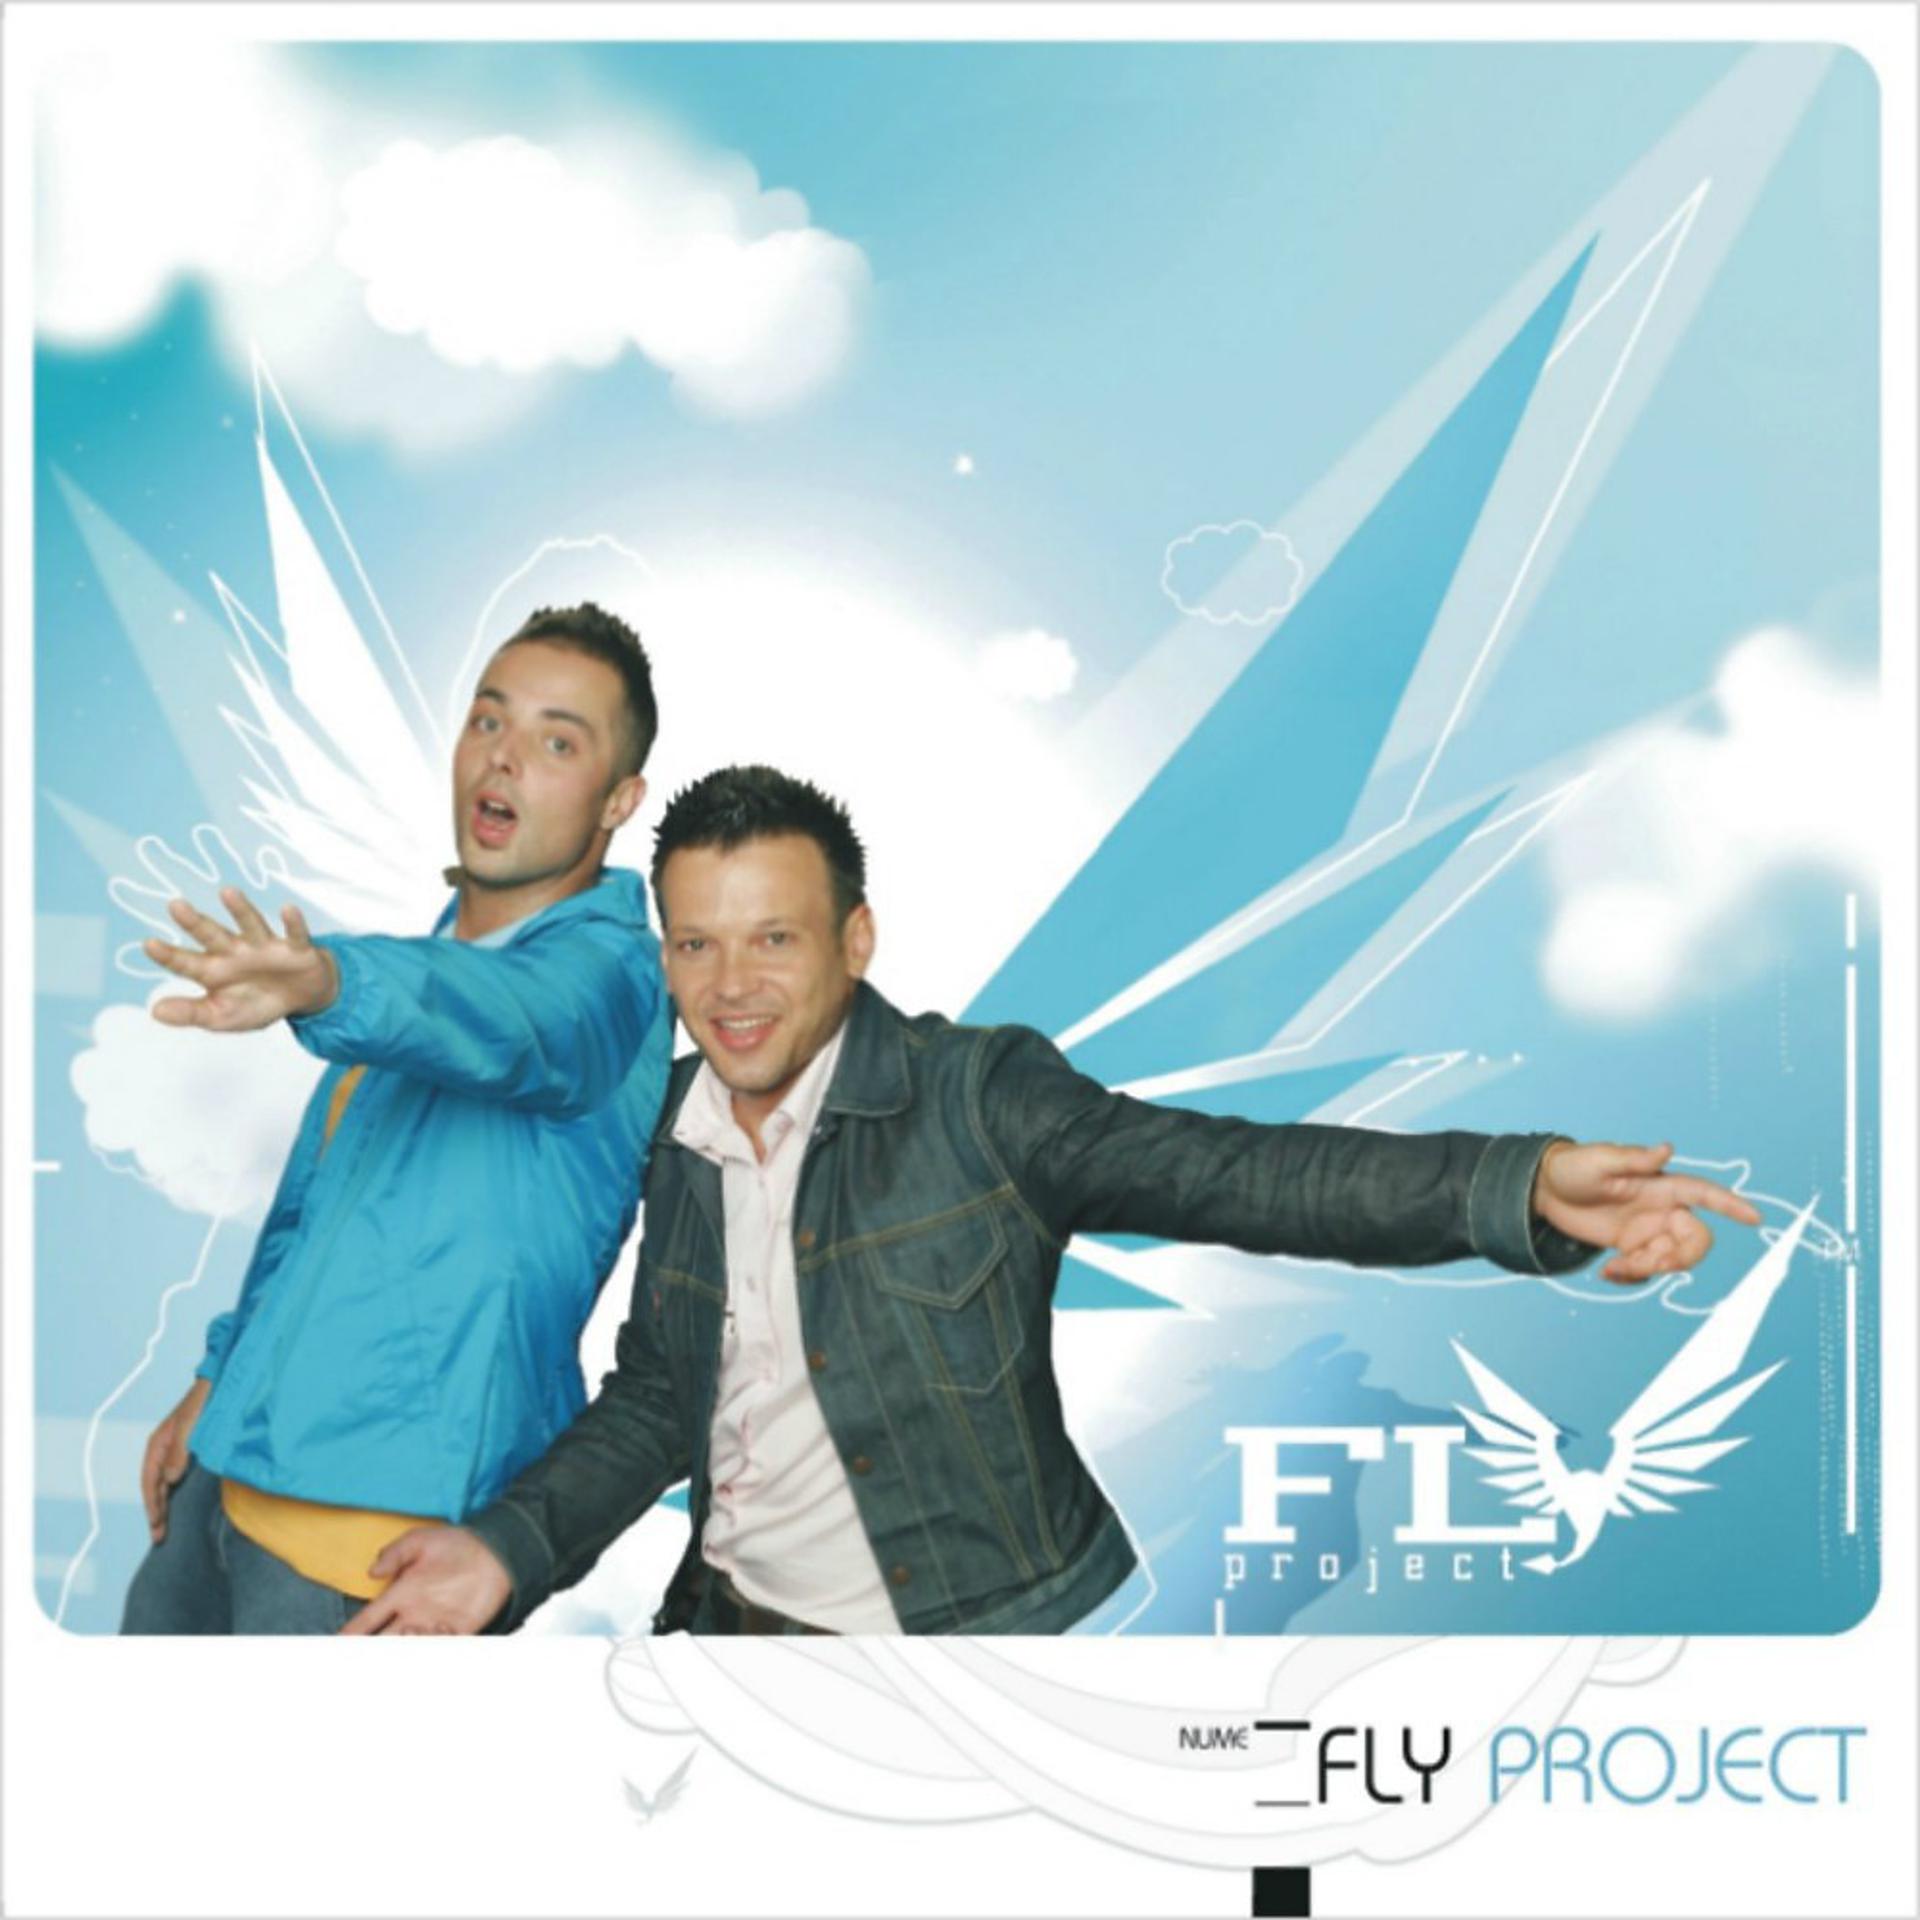 Группа Fly Project. Fly Project Fly Project. Флай Проджект картинки. Fly Project 2022. Трек project